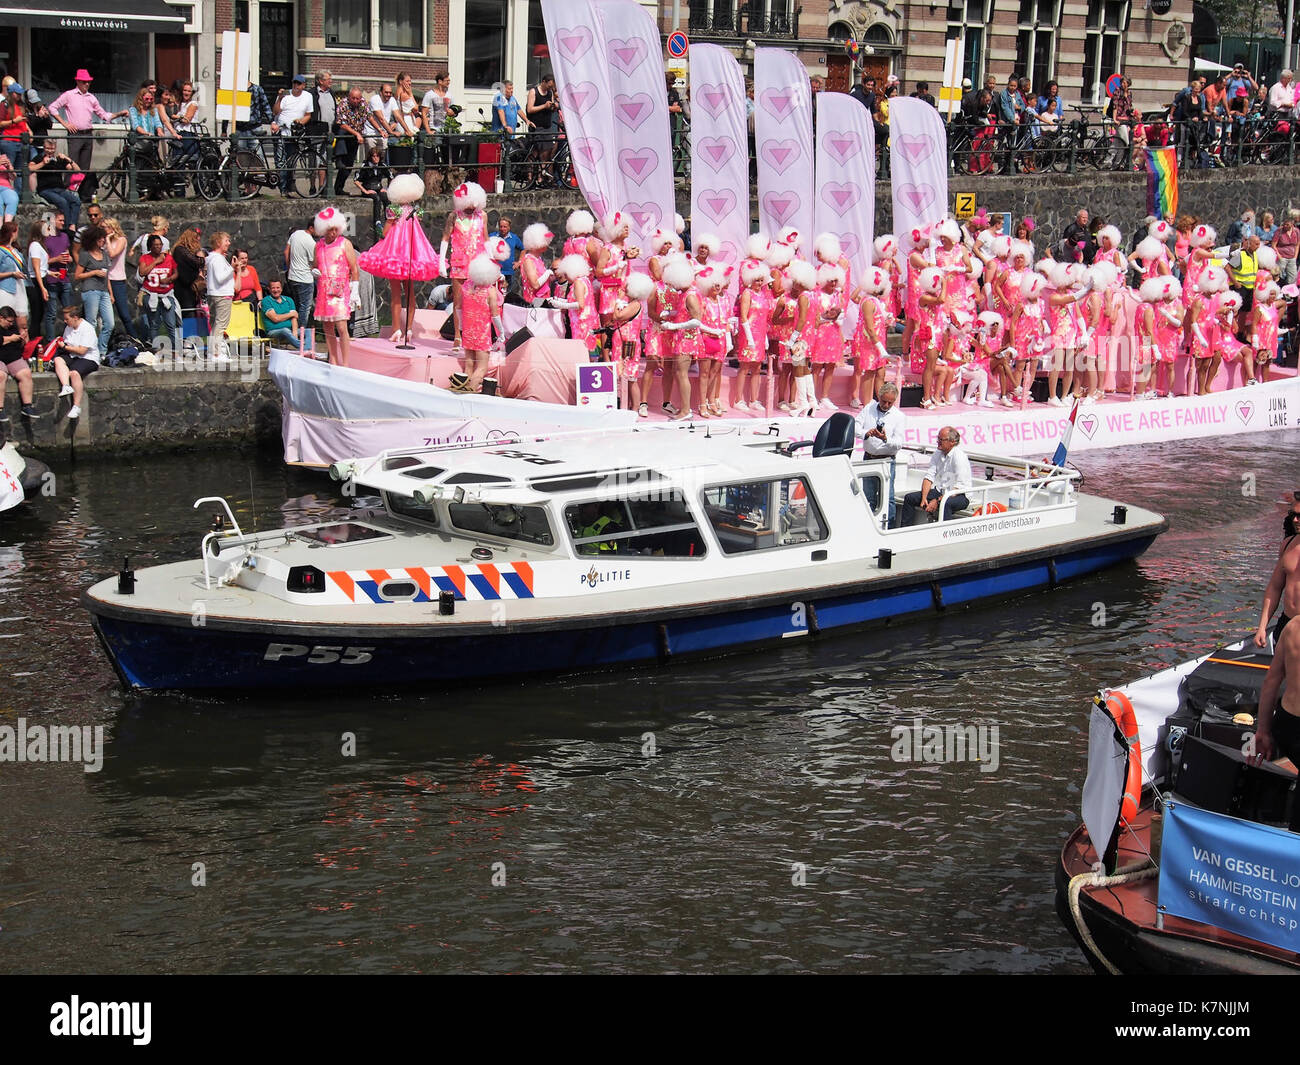 P55 Politie, Canal Parade Amsterdam 2017 foto 1 Stock Photo